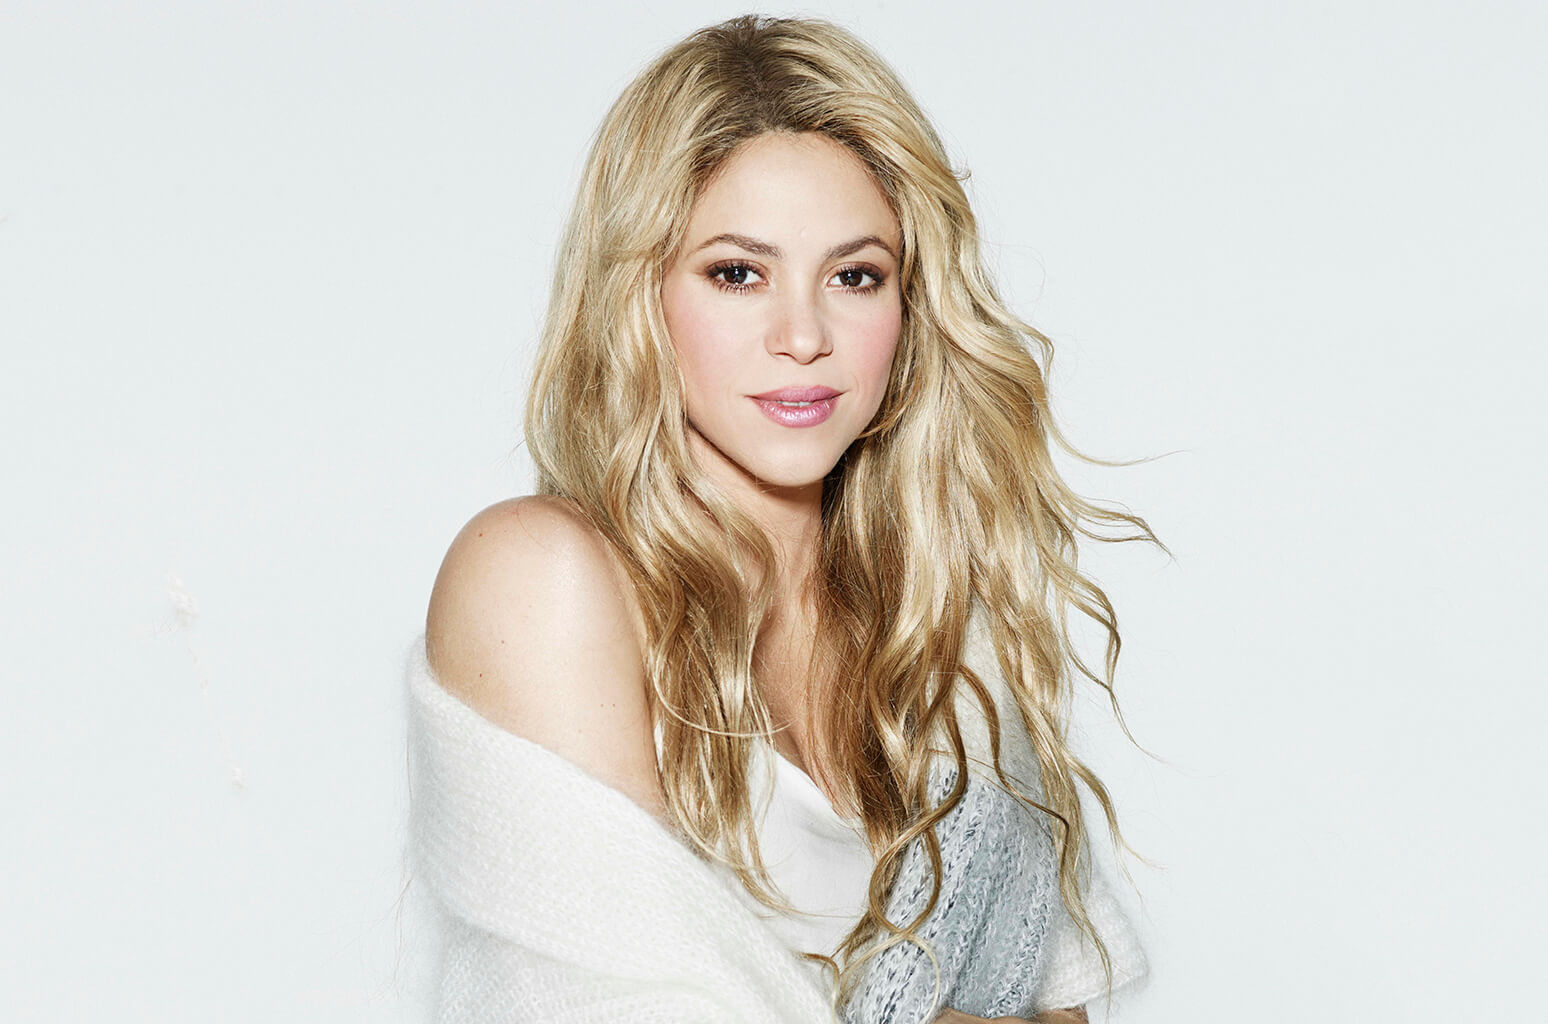 Shakira Biography, Age, Weight, Height, Friend, Like, Affairs